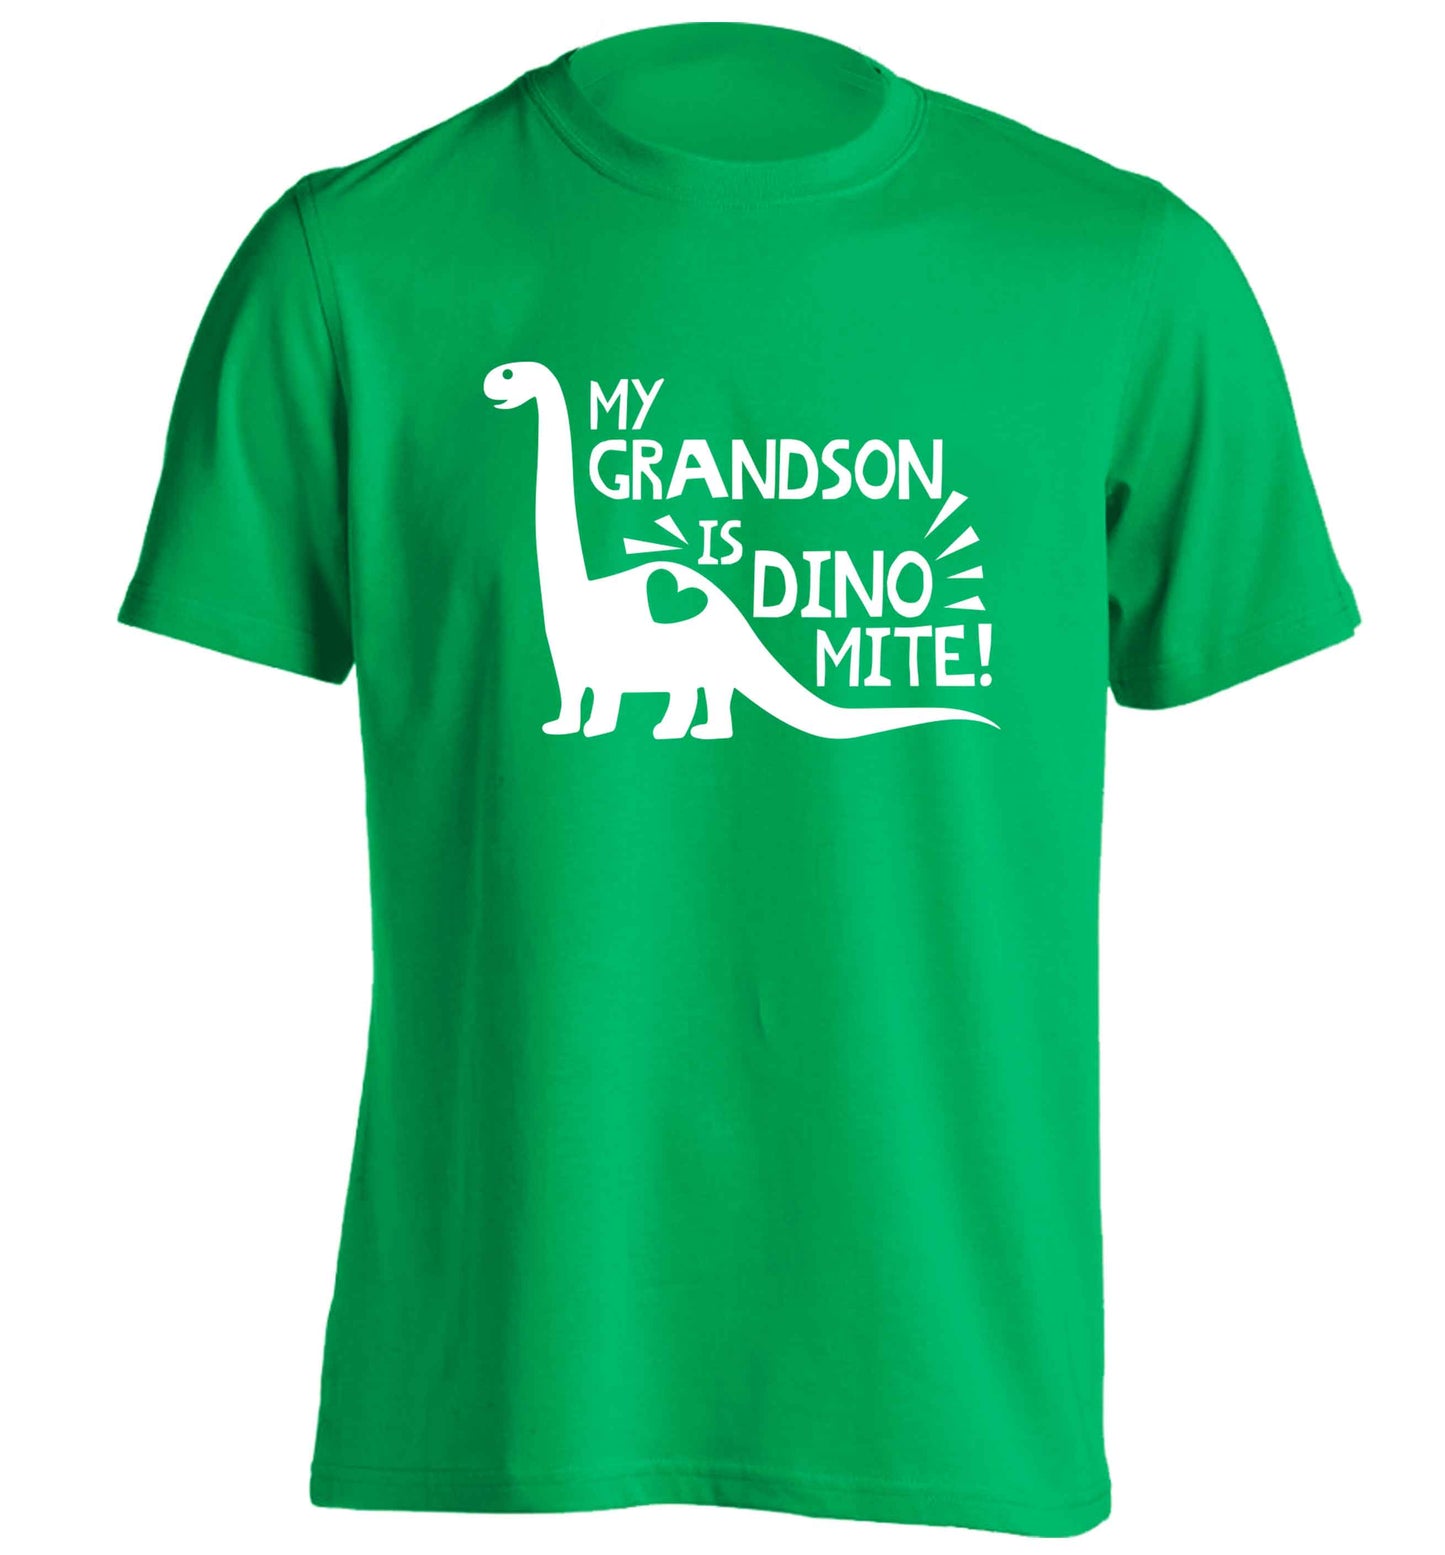 My grandson is dinomite! adults unisex green Tshirt 2XL